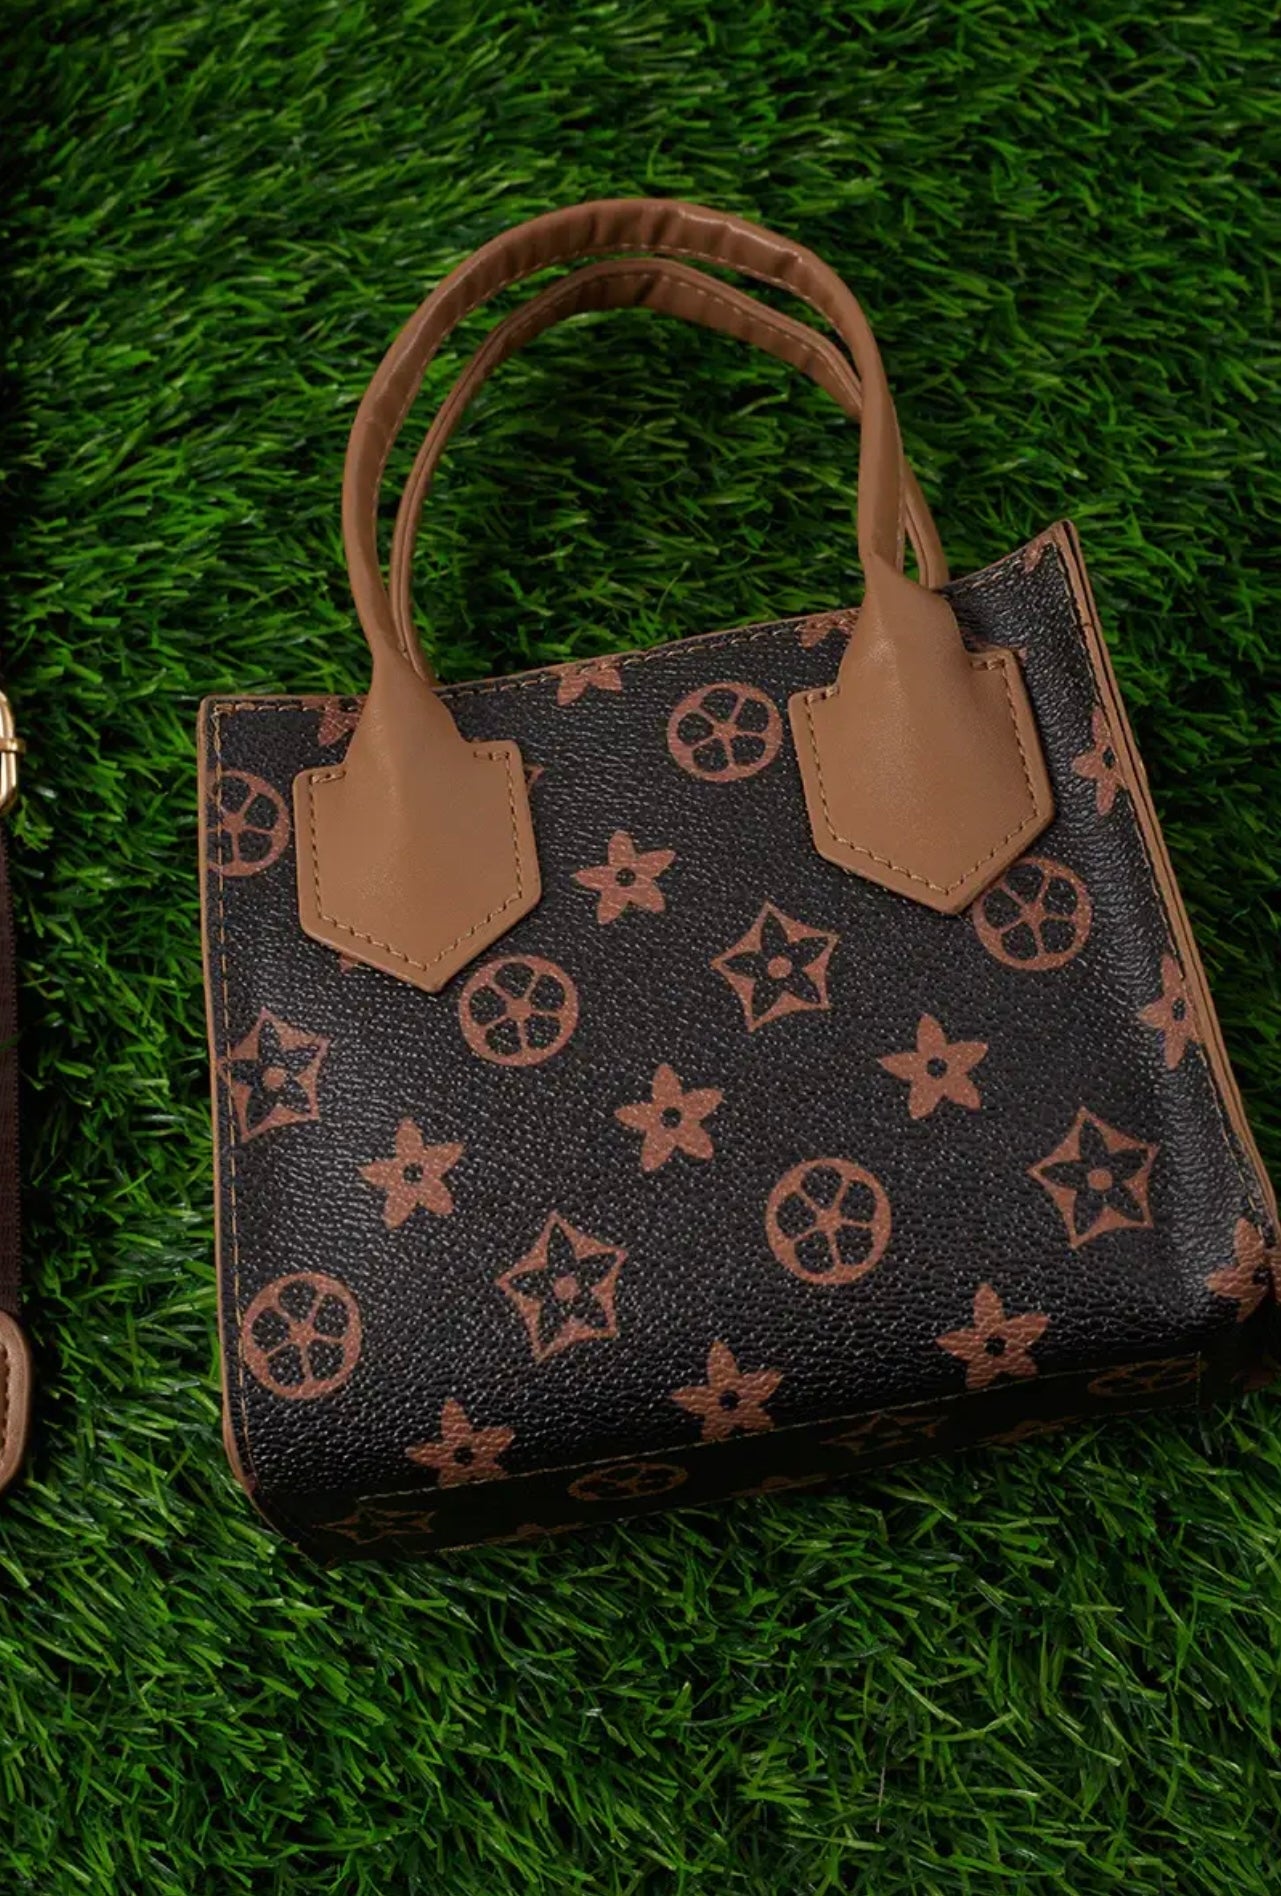 Star print wide strap mini purse